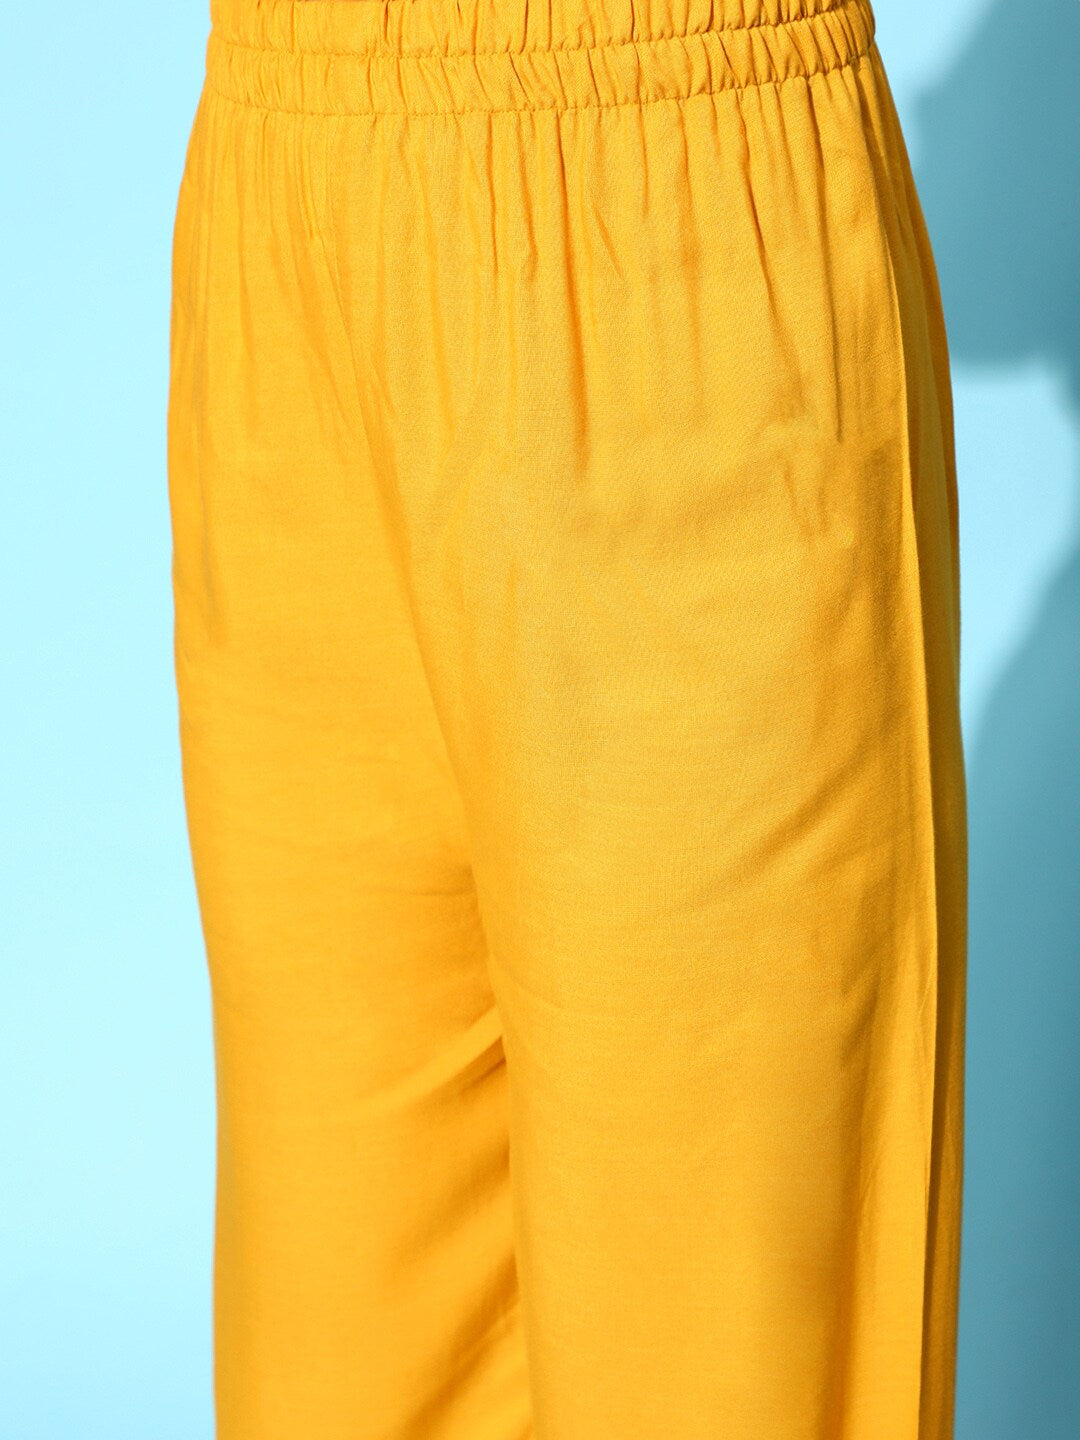 Women's Yellow Embroidered Straight Kurta With Plazo & Dupatta - Nayo Clothing